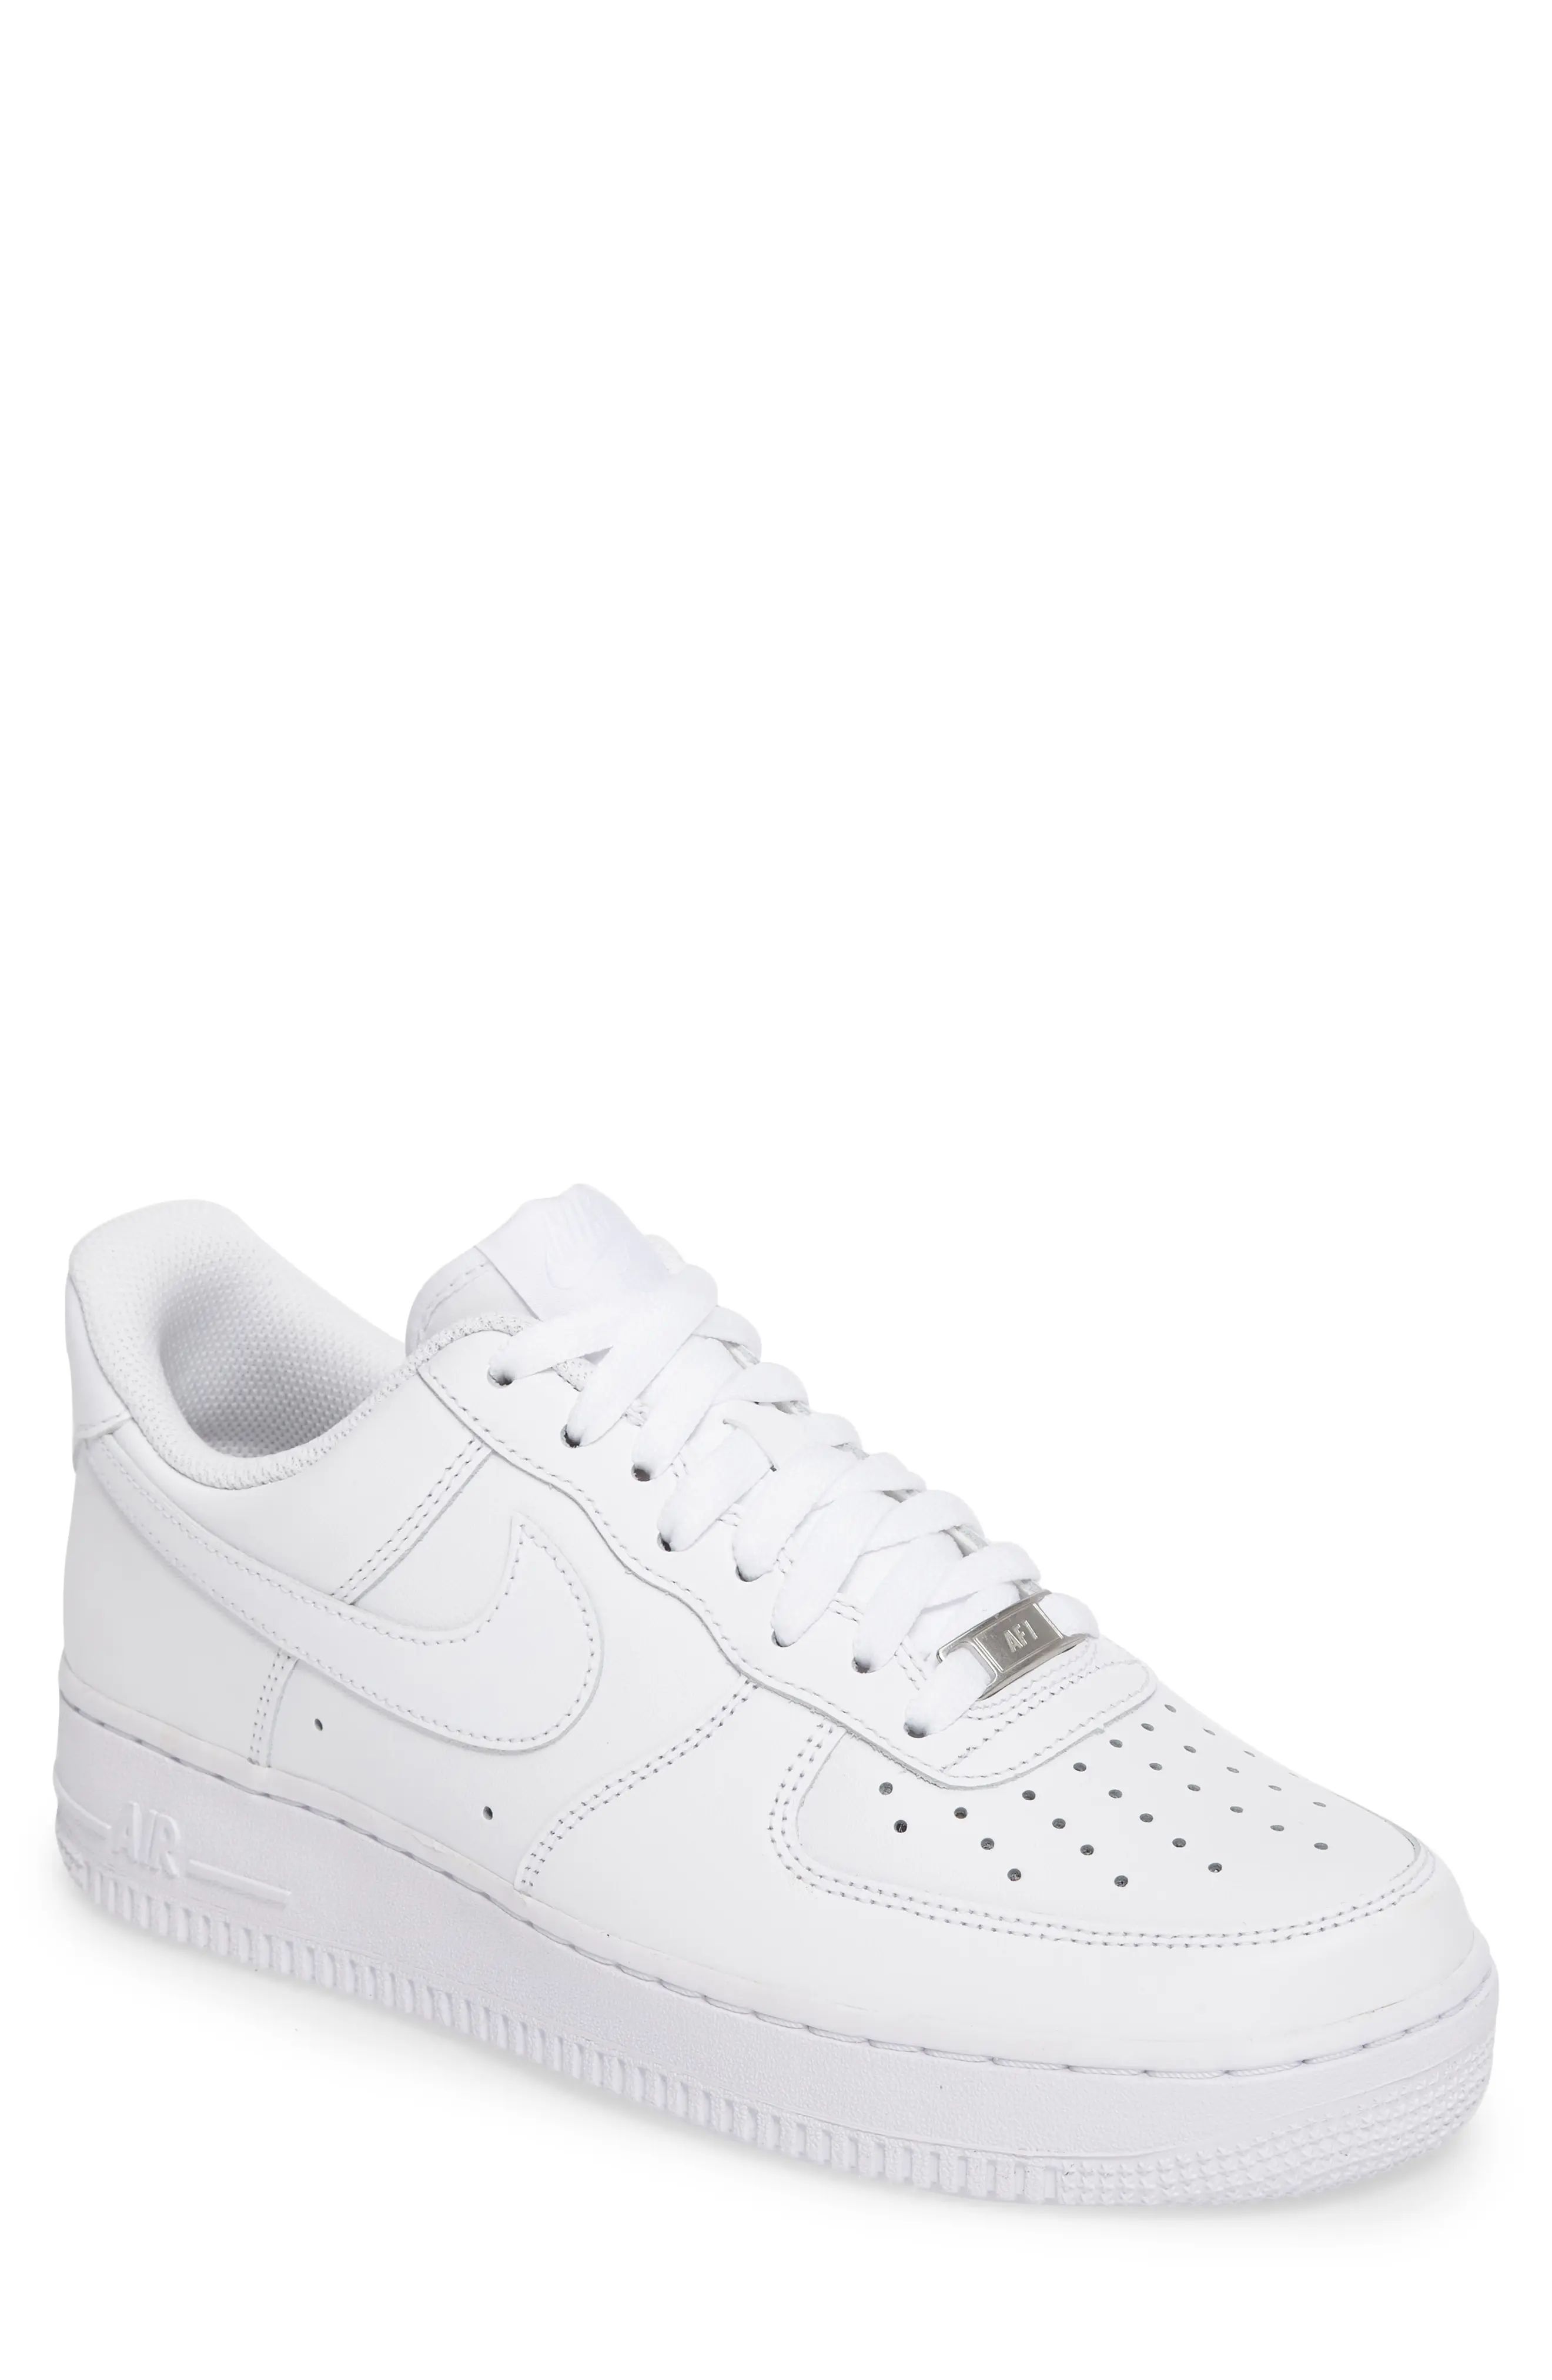 Men's Nike Air Force 1 '07 Sneaker, Size 12.5 M - White | Nordstrom